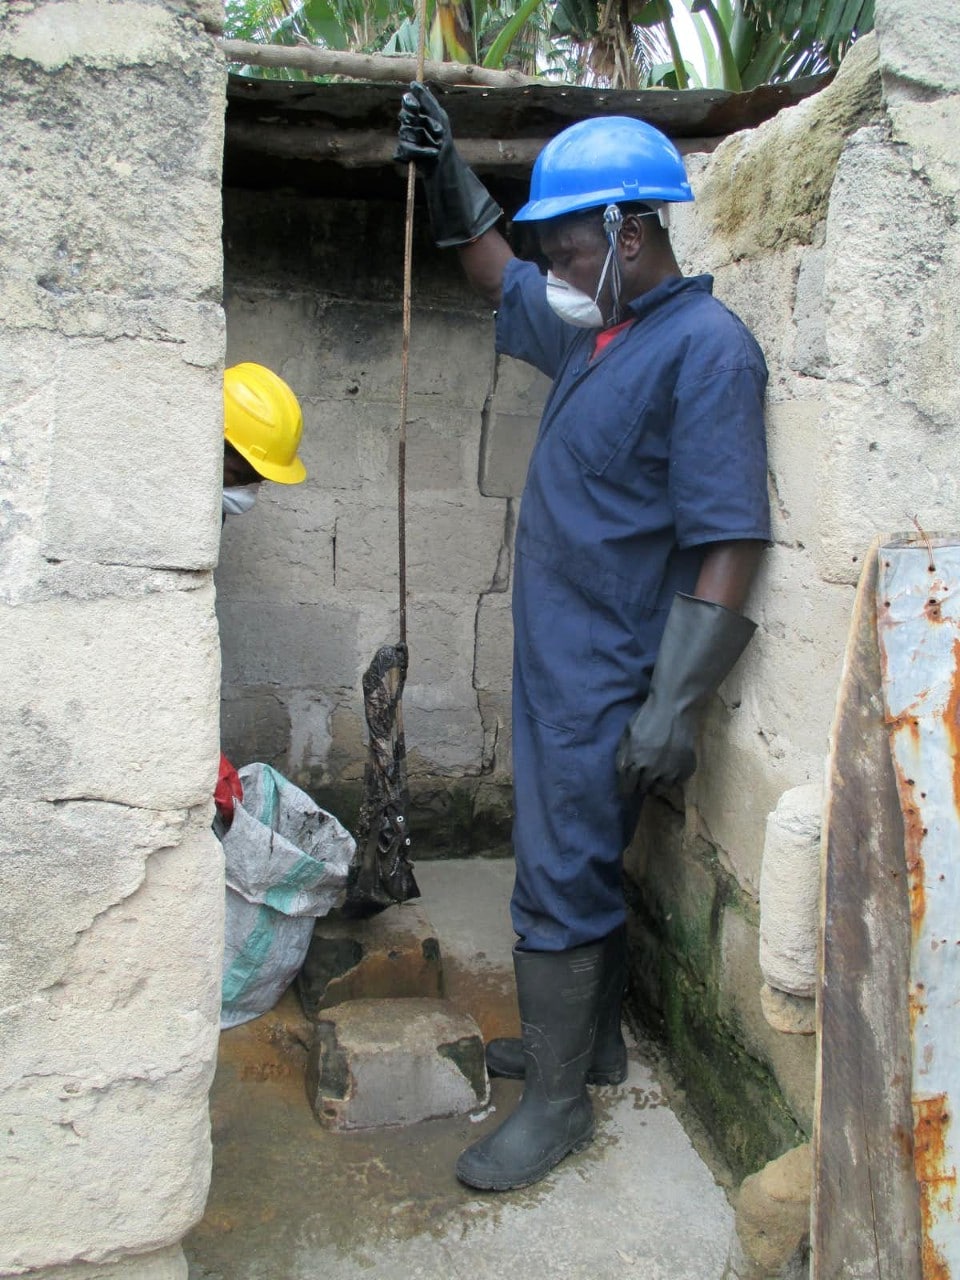 A man empties a pit latrine in urban Tanzania